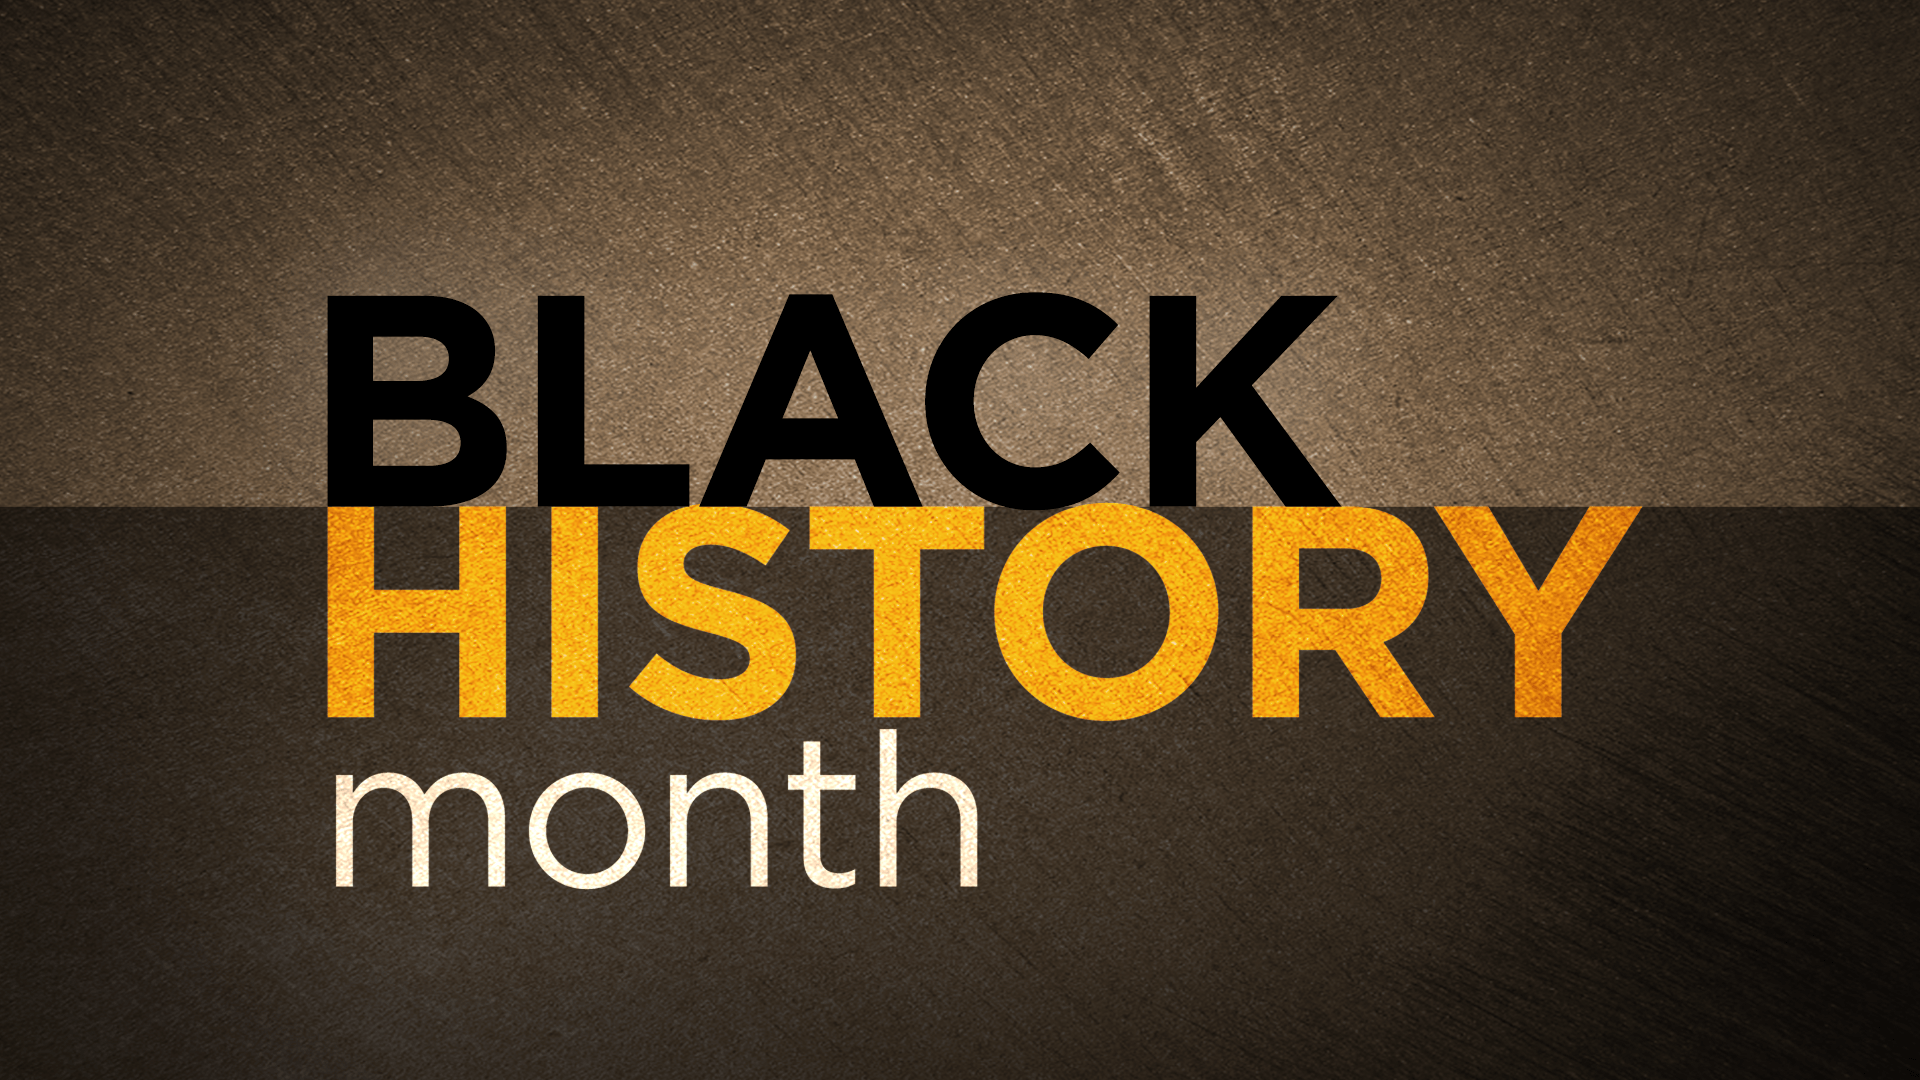 Black History Month Wallpaper Images  Free Download on Freepik